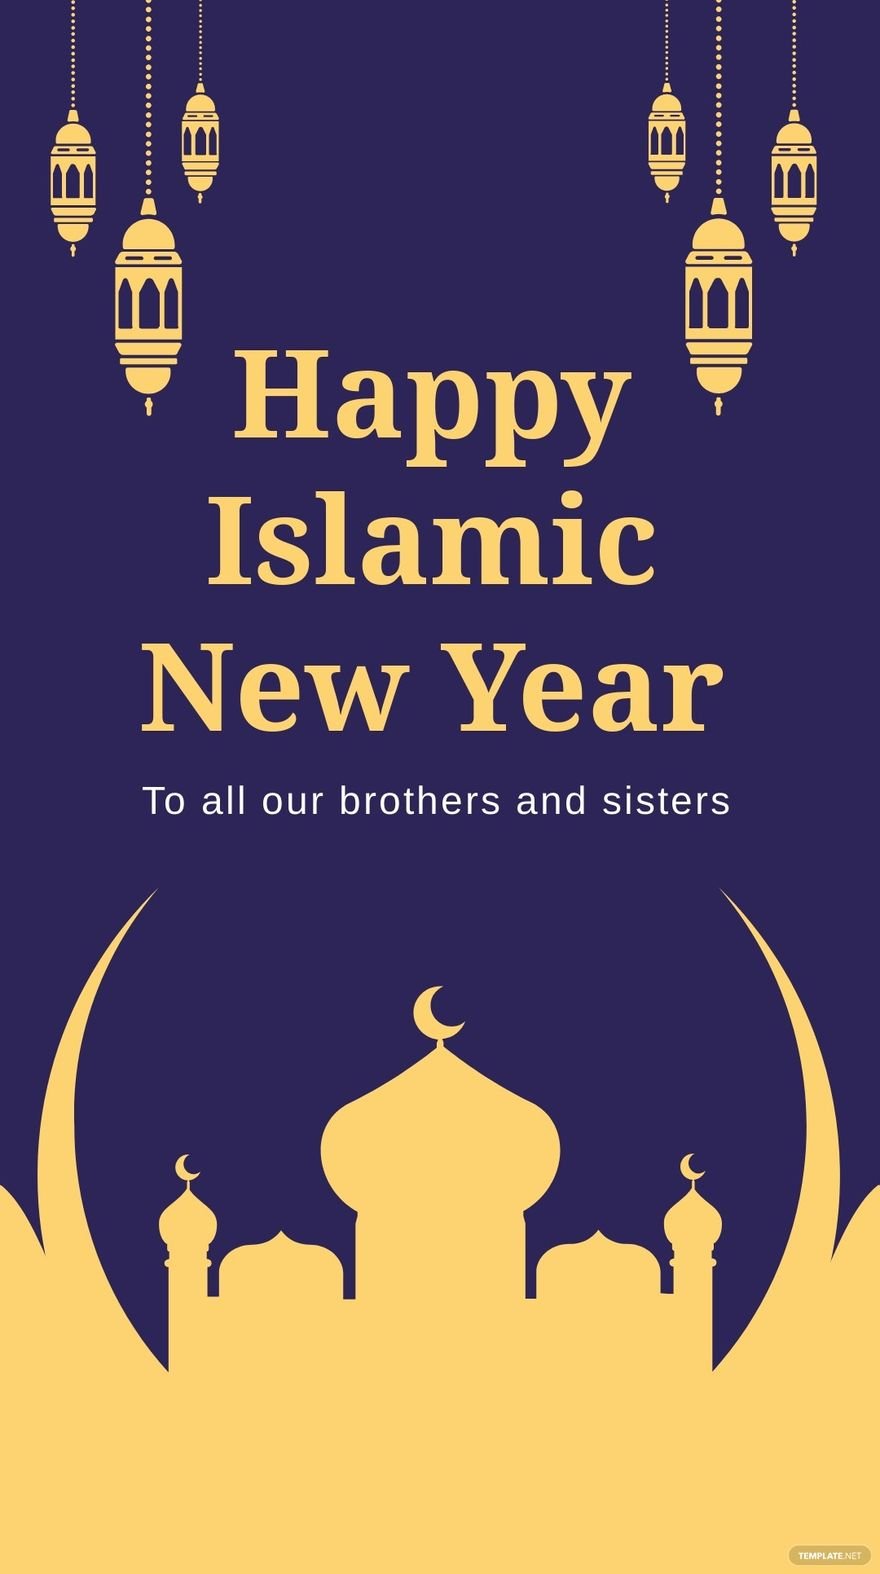 Islamic New Year Whatsapp Post Template in Illustrator, PSD